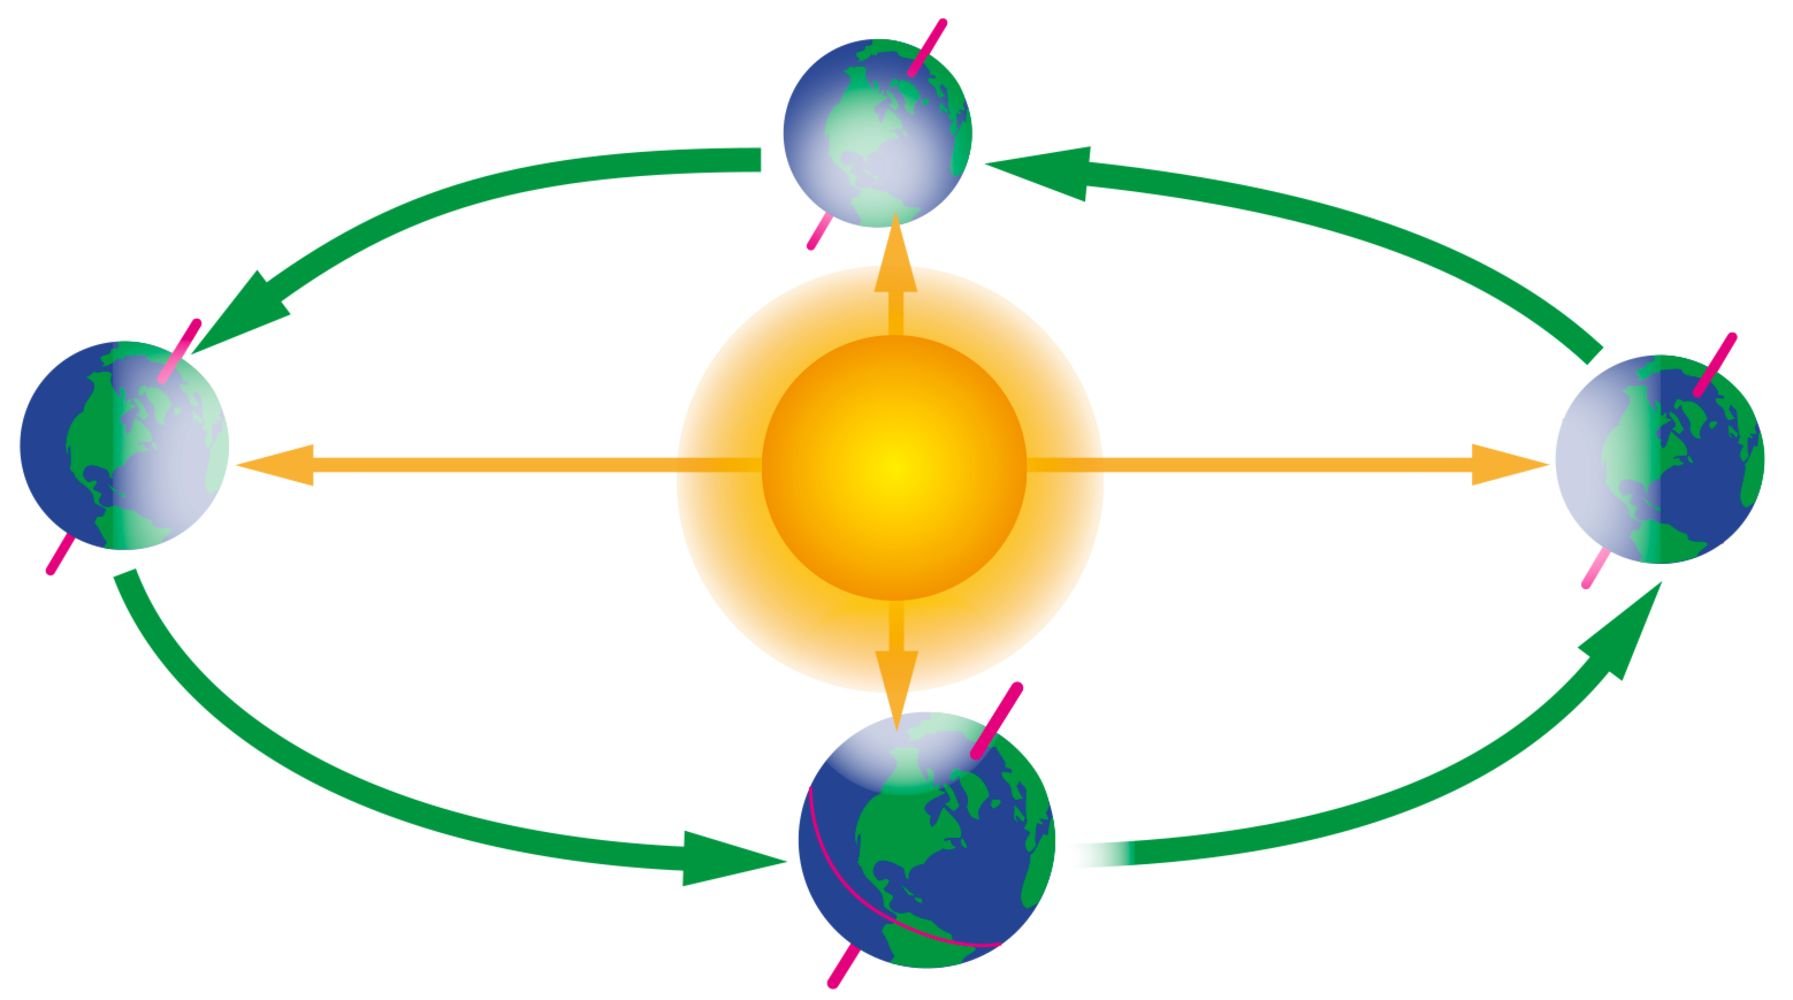 Схема вращения земли вокруг солнца